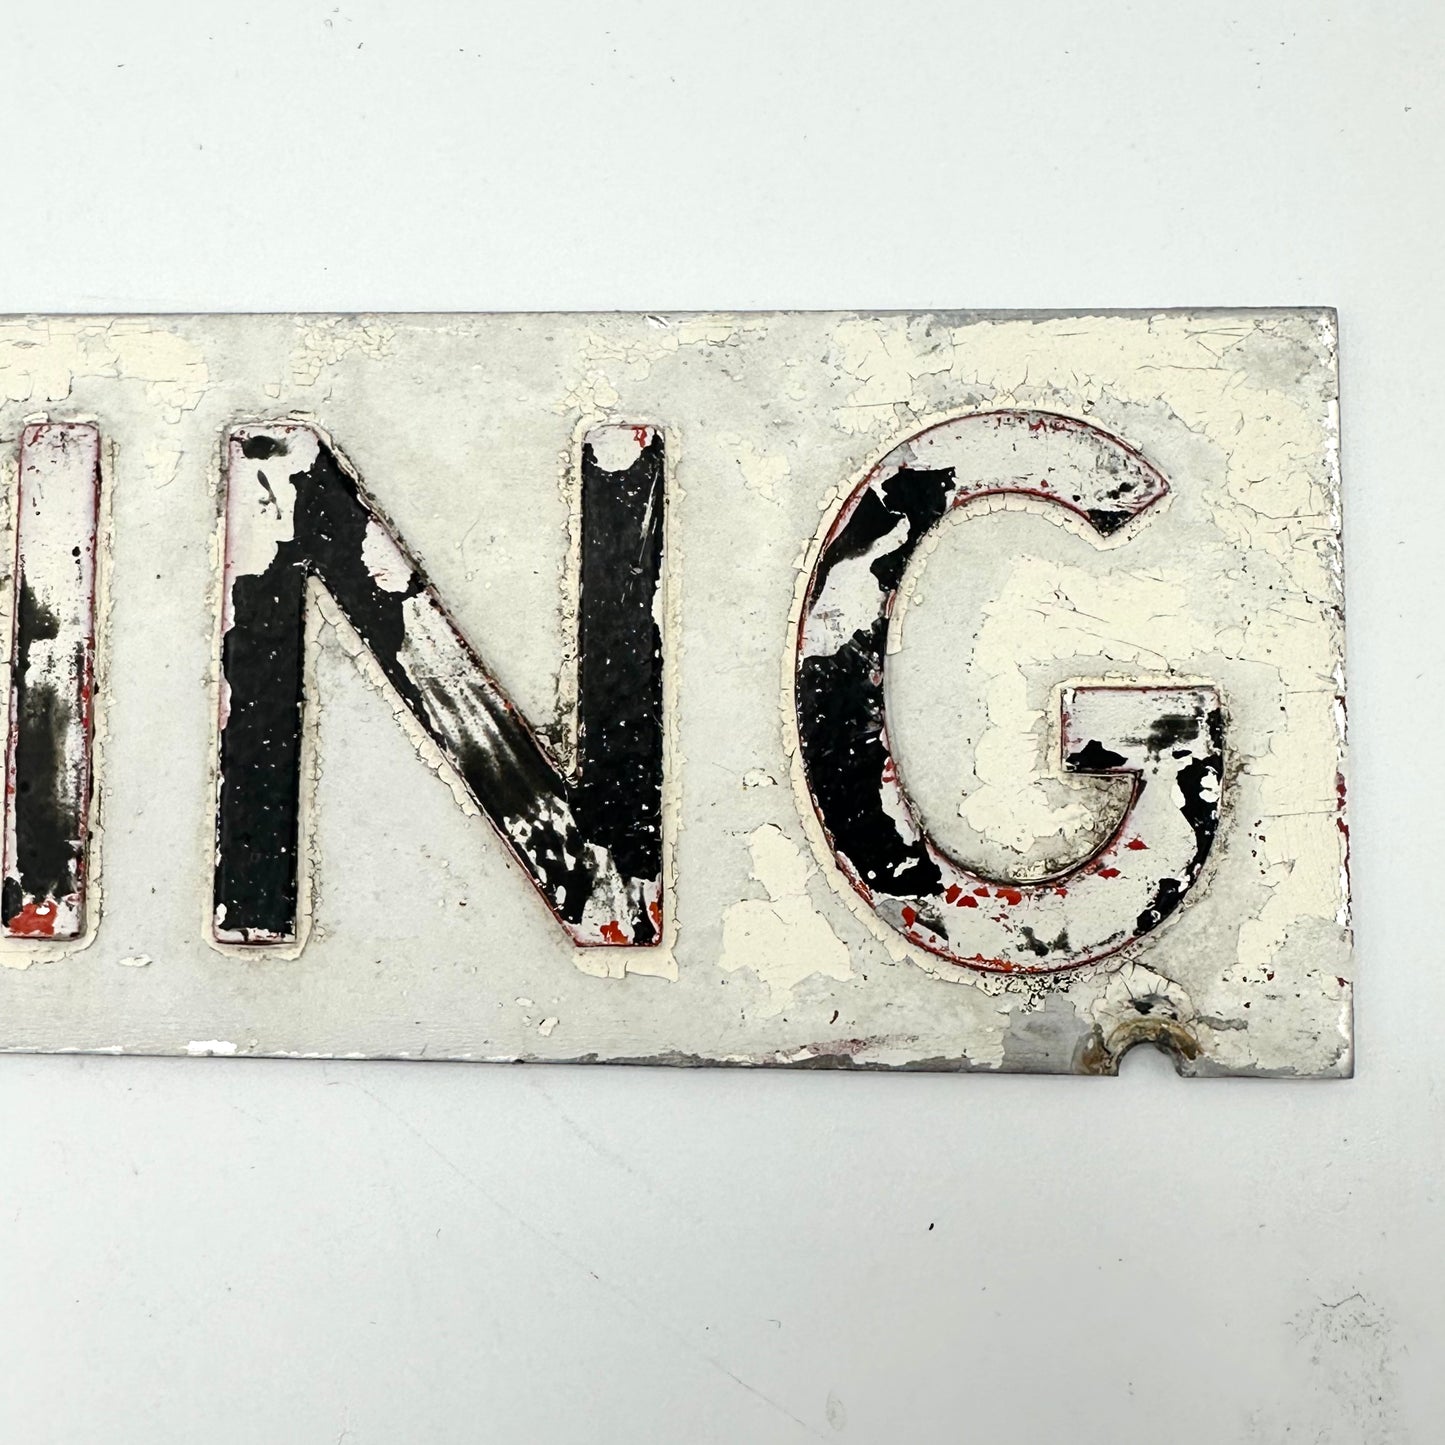 Antique 'Ealing' Studio Cut Victorian London Street Sign